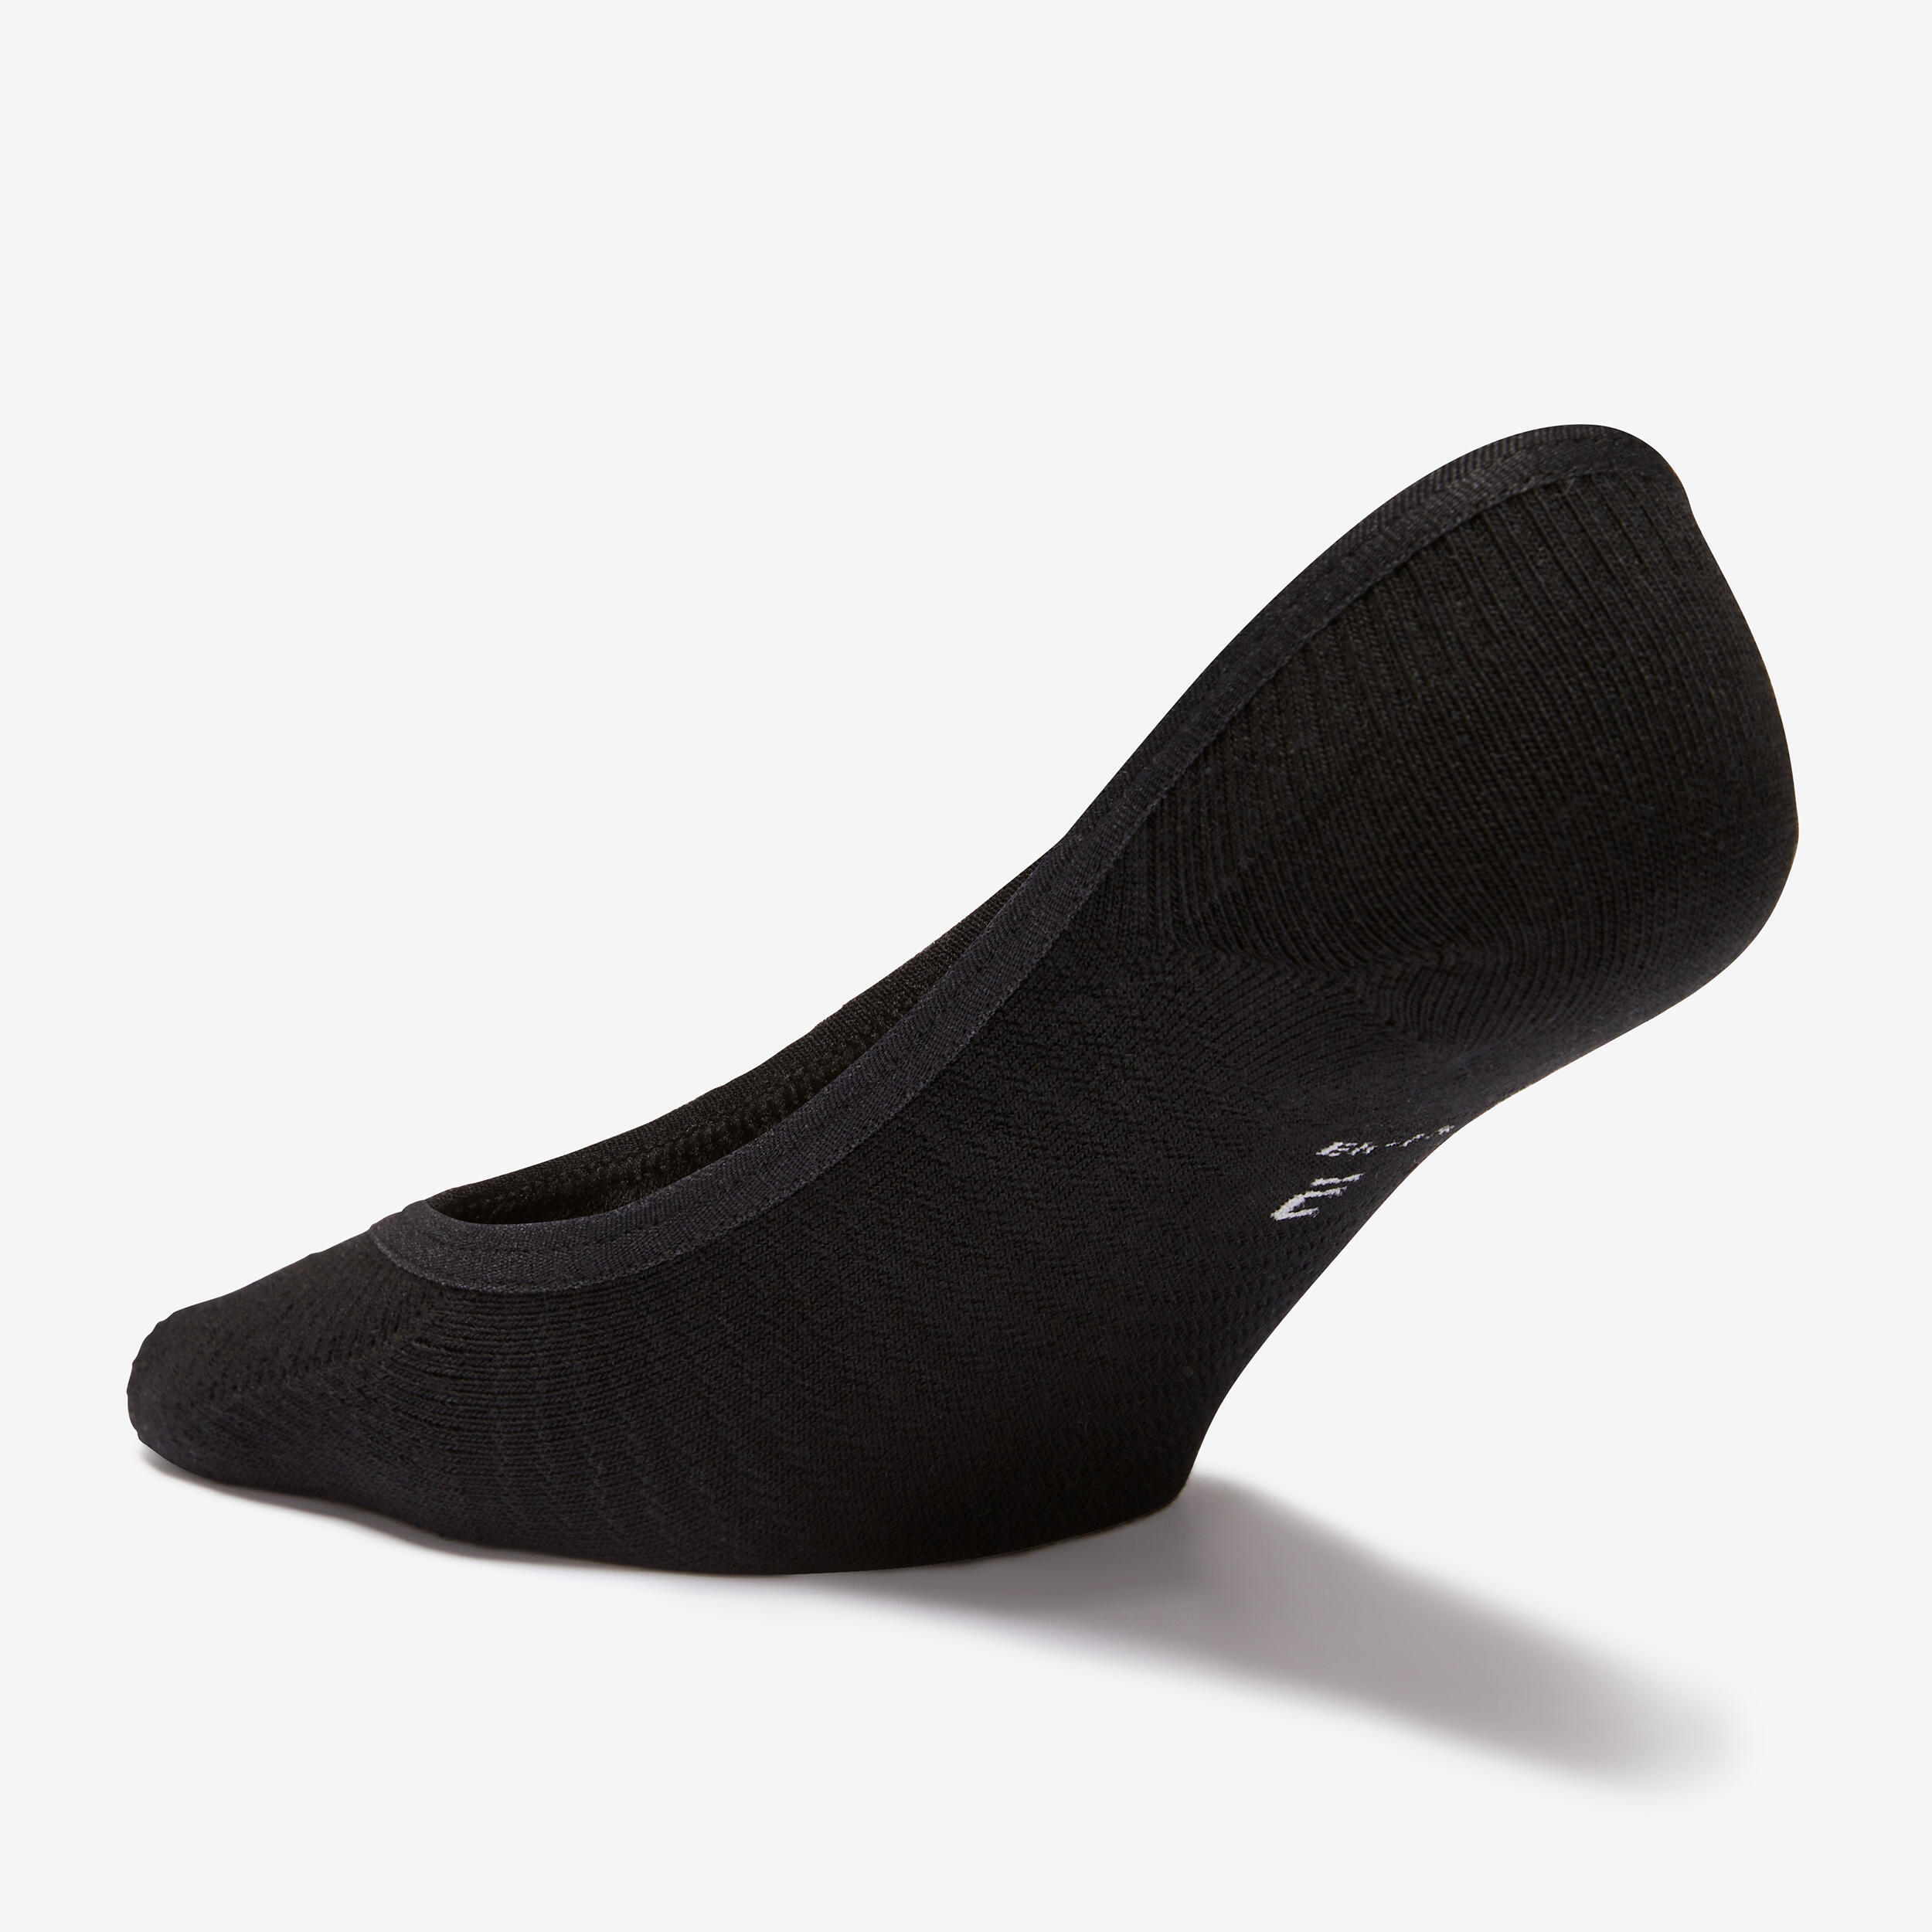 Low Ballerina Socks - Deocell Tech URBAN WALK pack of 2 pairs - black 4/5